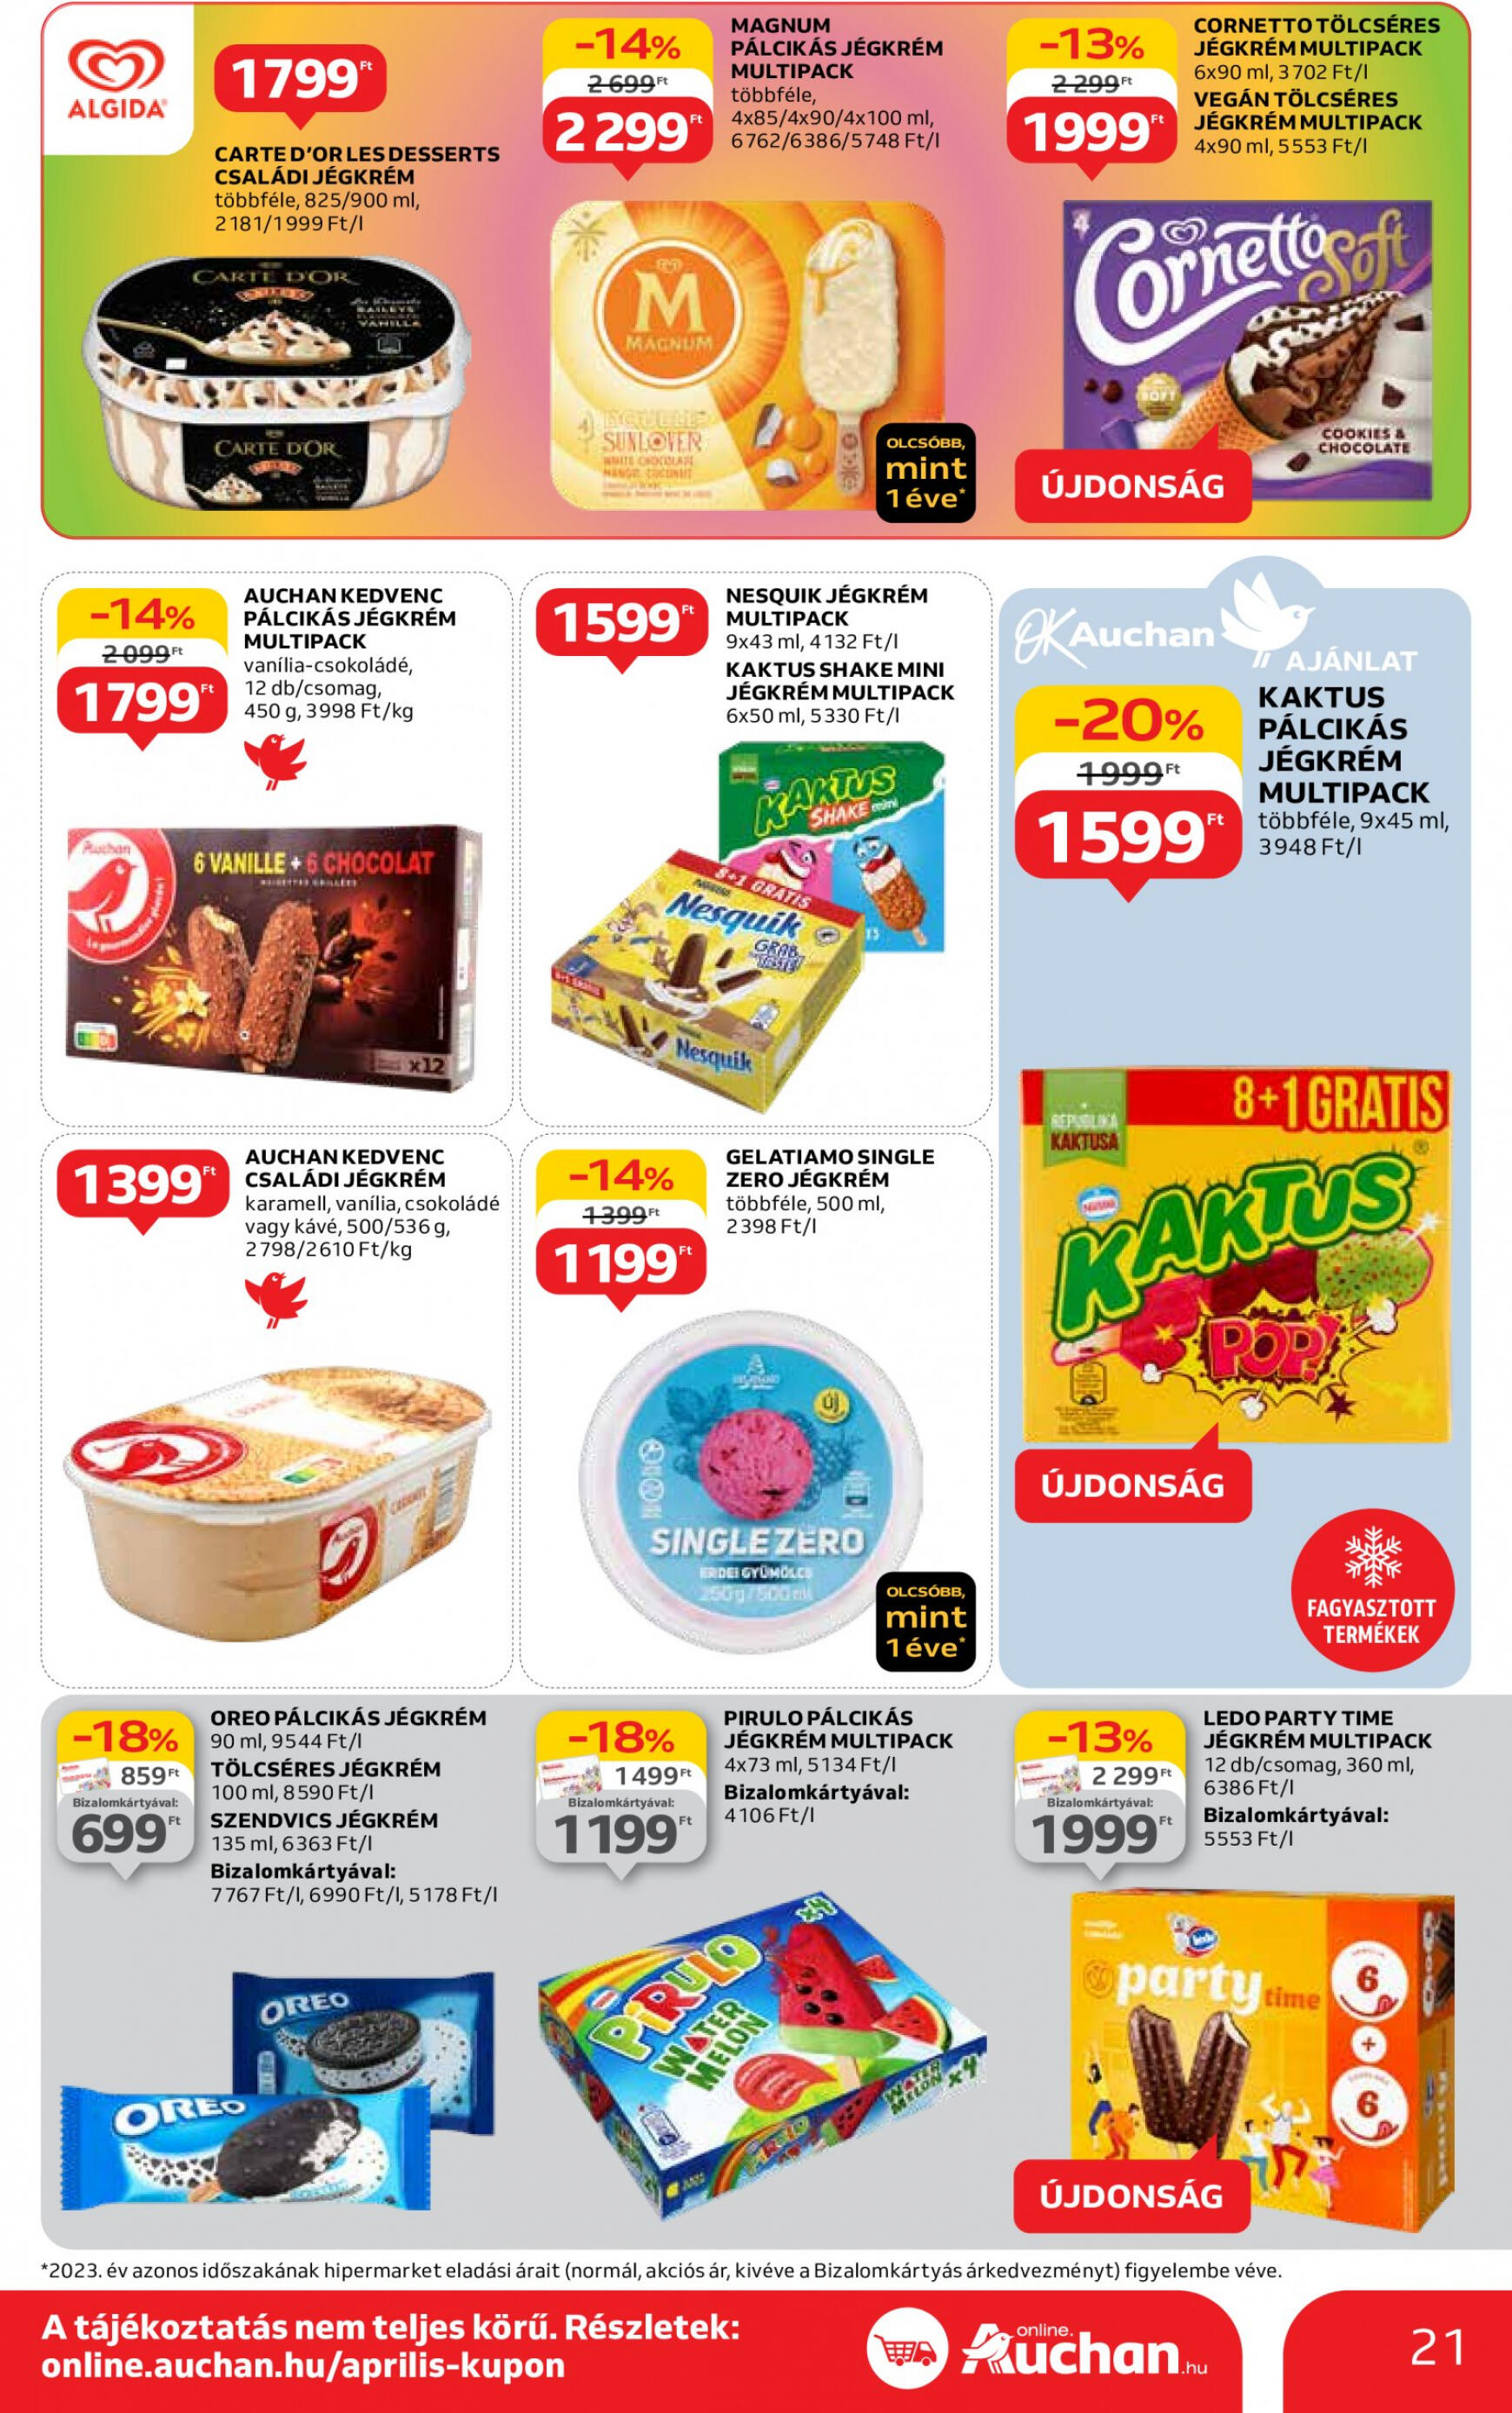 auchan - Aktuális újság Auchan 04.18. - 04.24. - page: 21